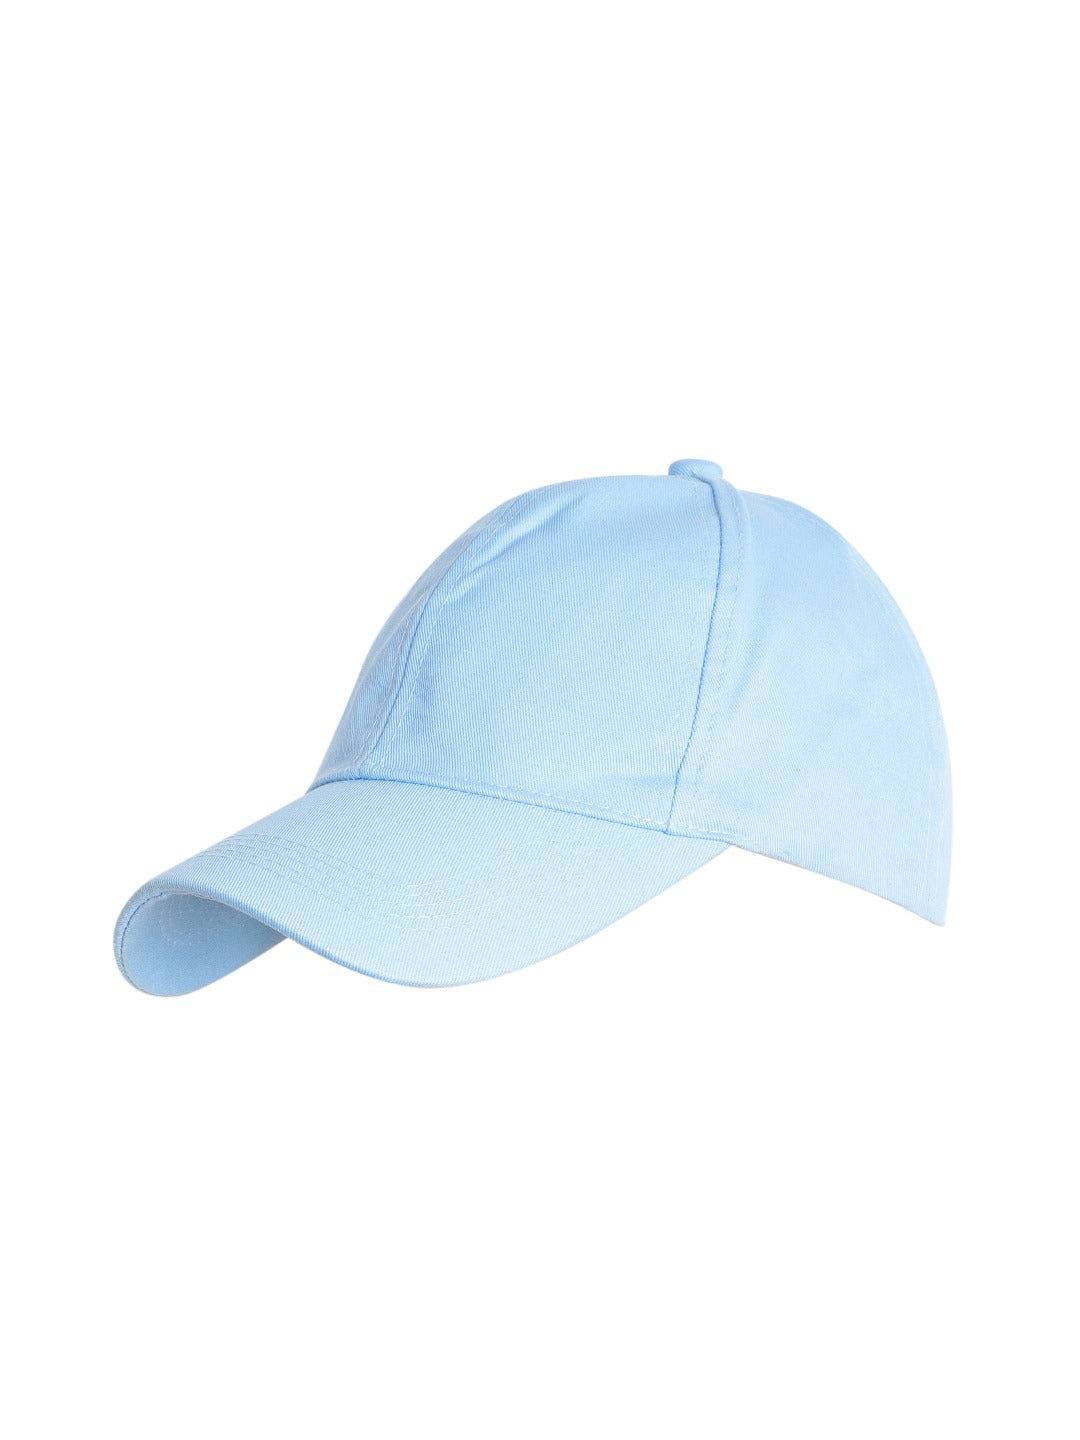 Blueberry Sky Blue solid baseball cap